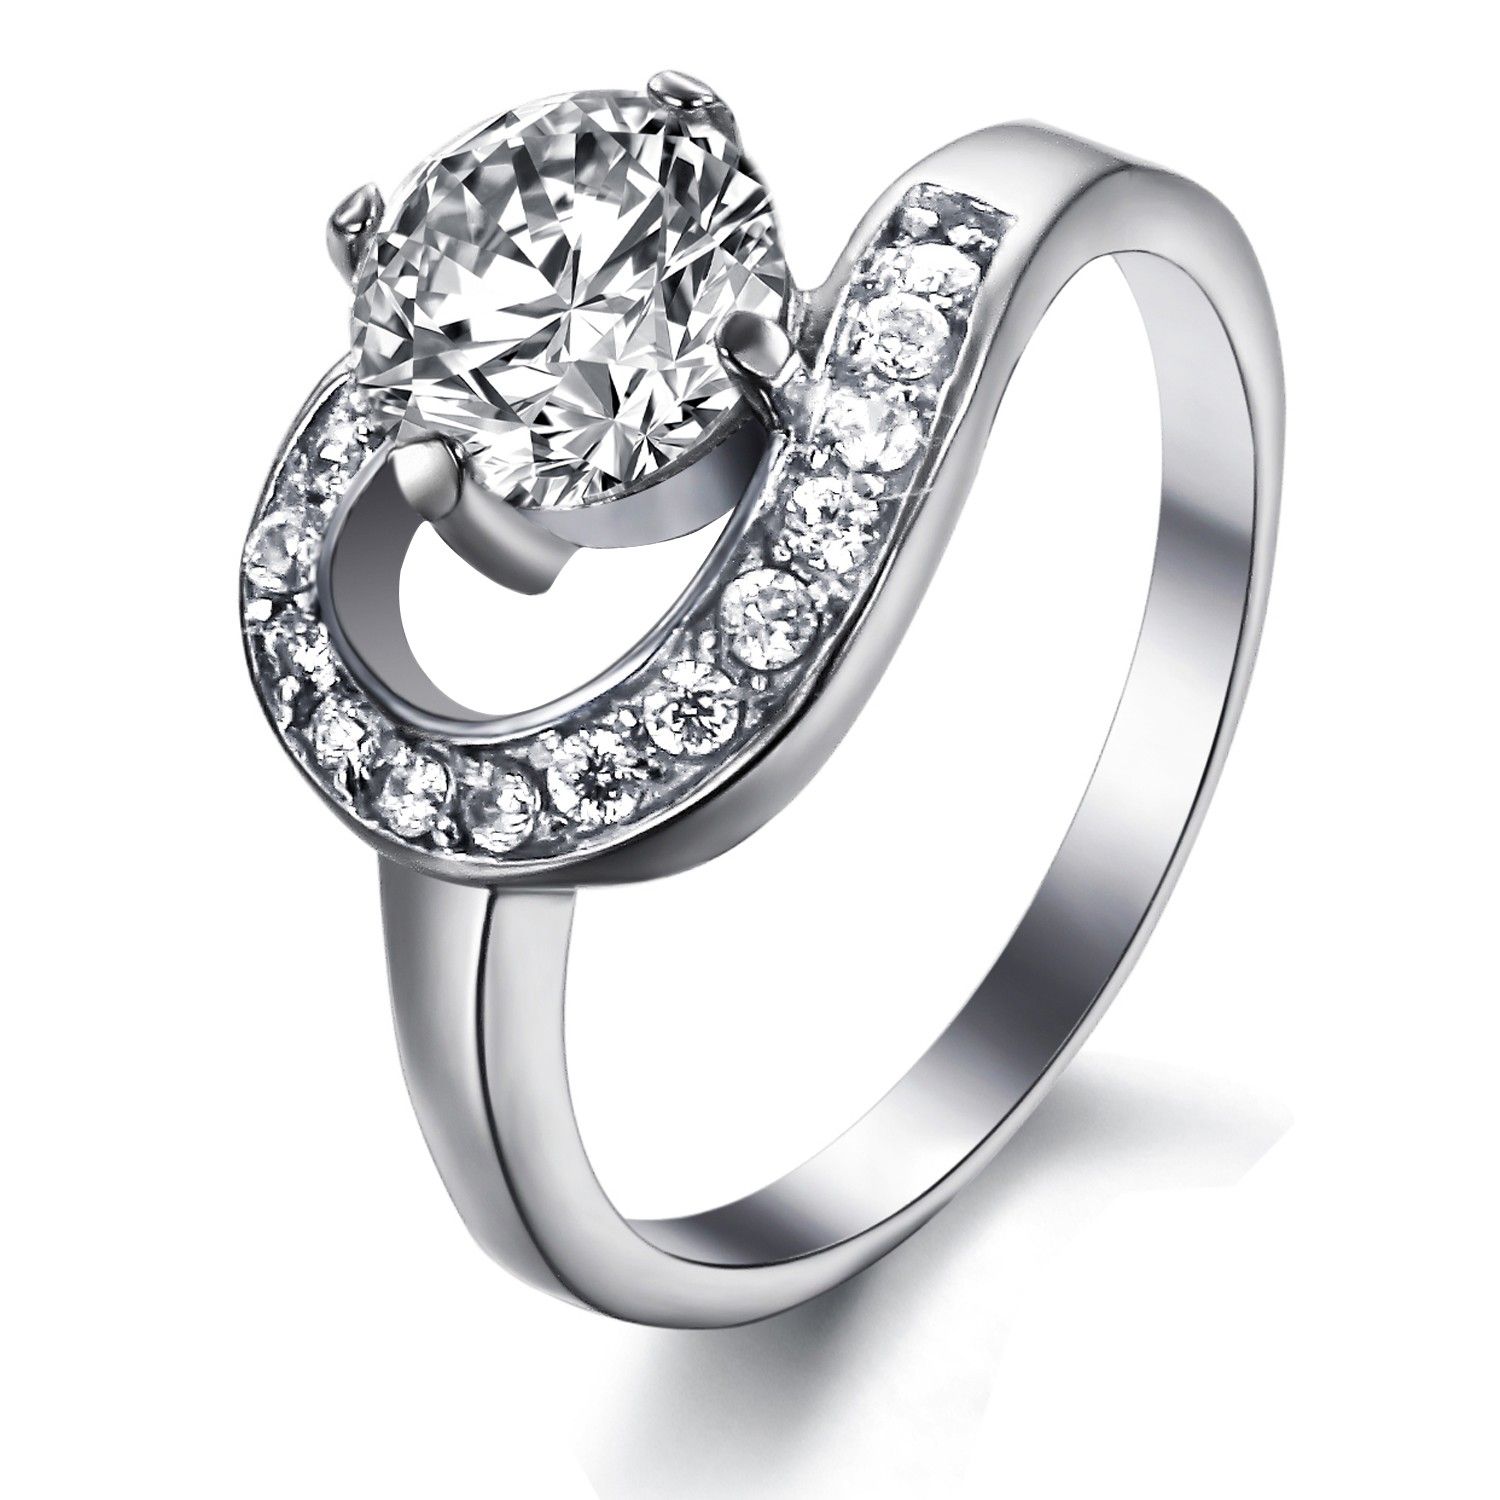 Wedding Rings - Swiss Diamond - tg05 - Ms. titanium steel rings